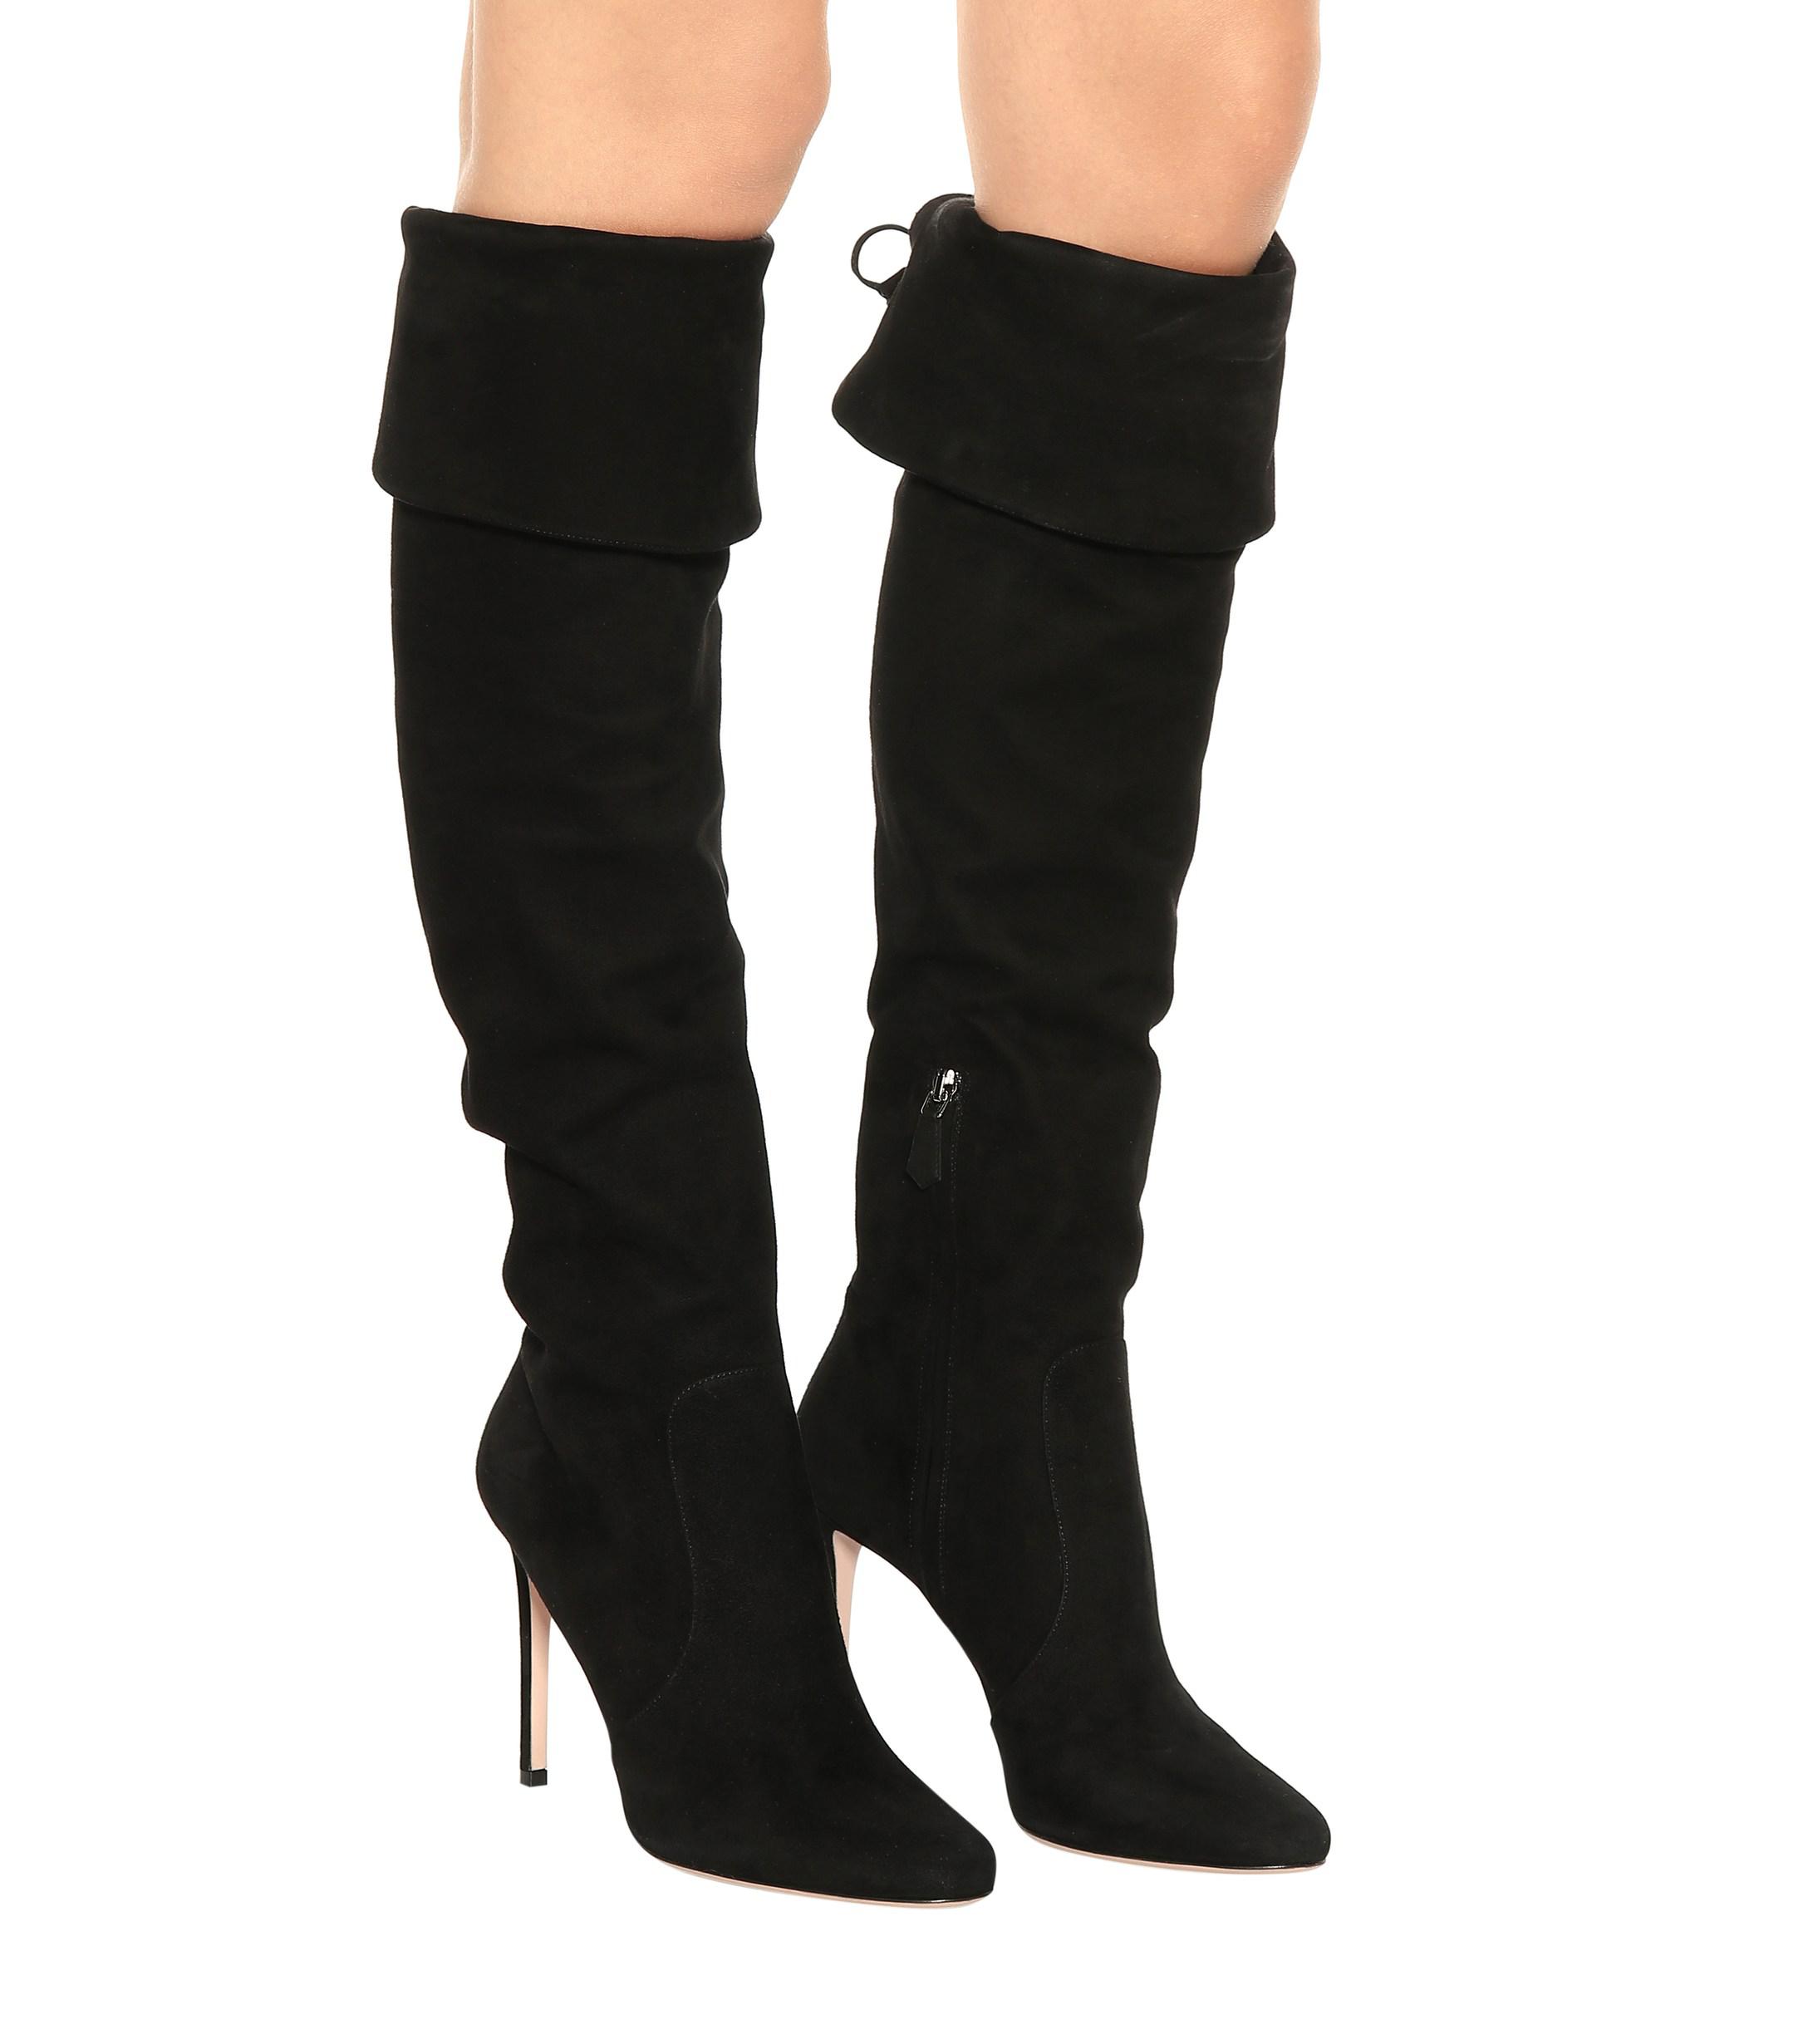 Prada Suede Knee-high Boots in Black - Lyst